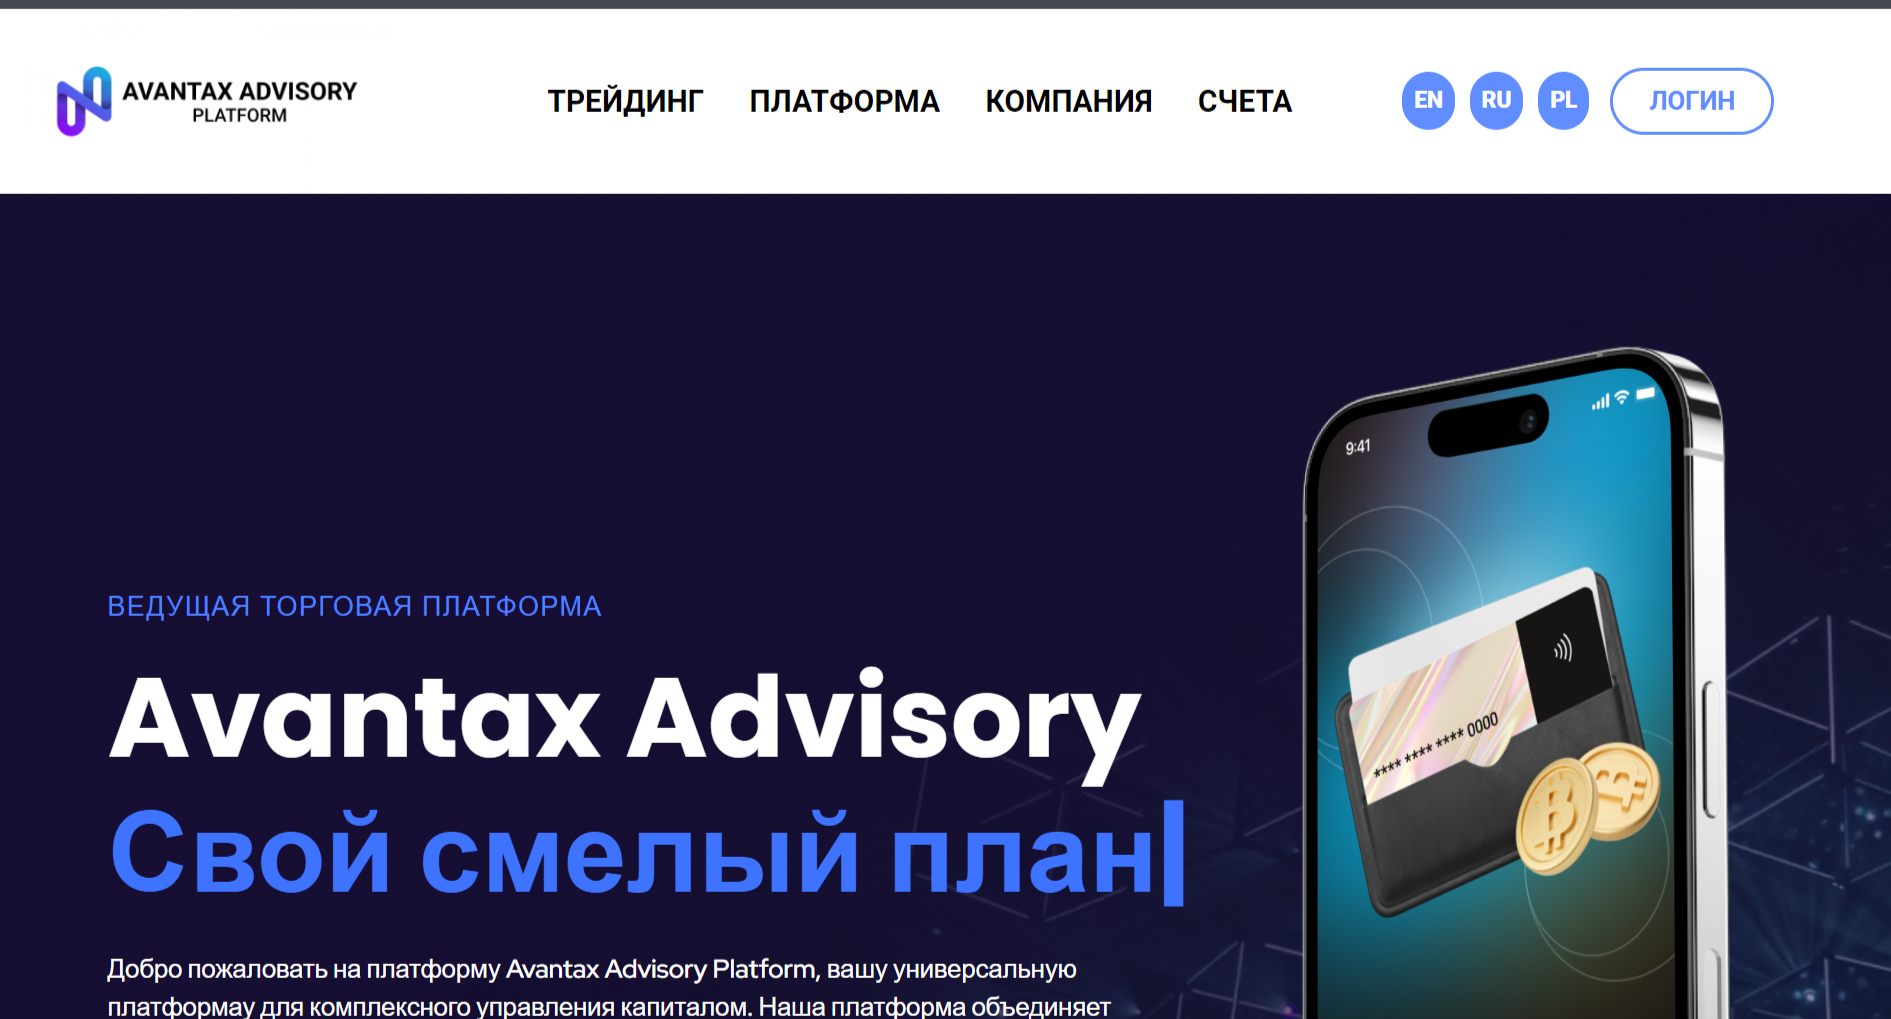 Avantax Advisory - официальный сайт